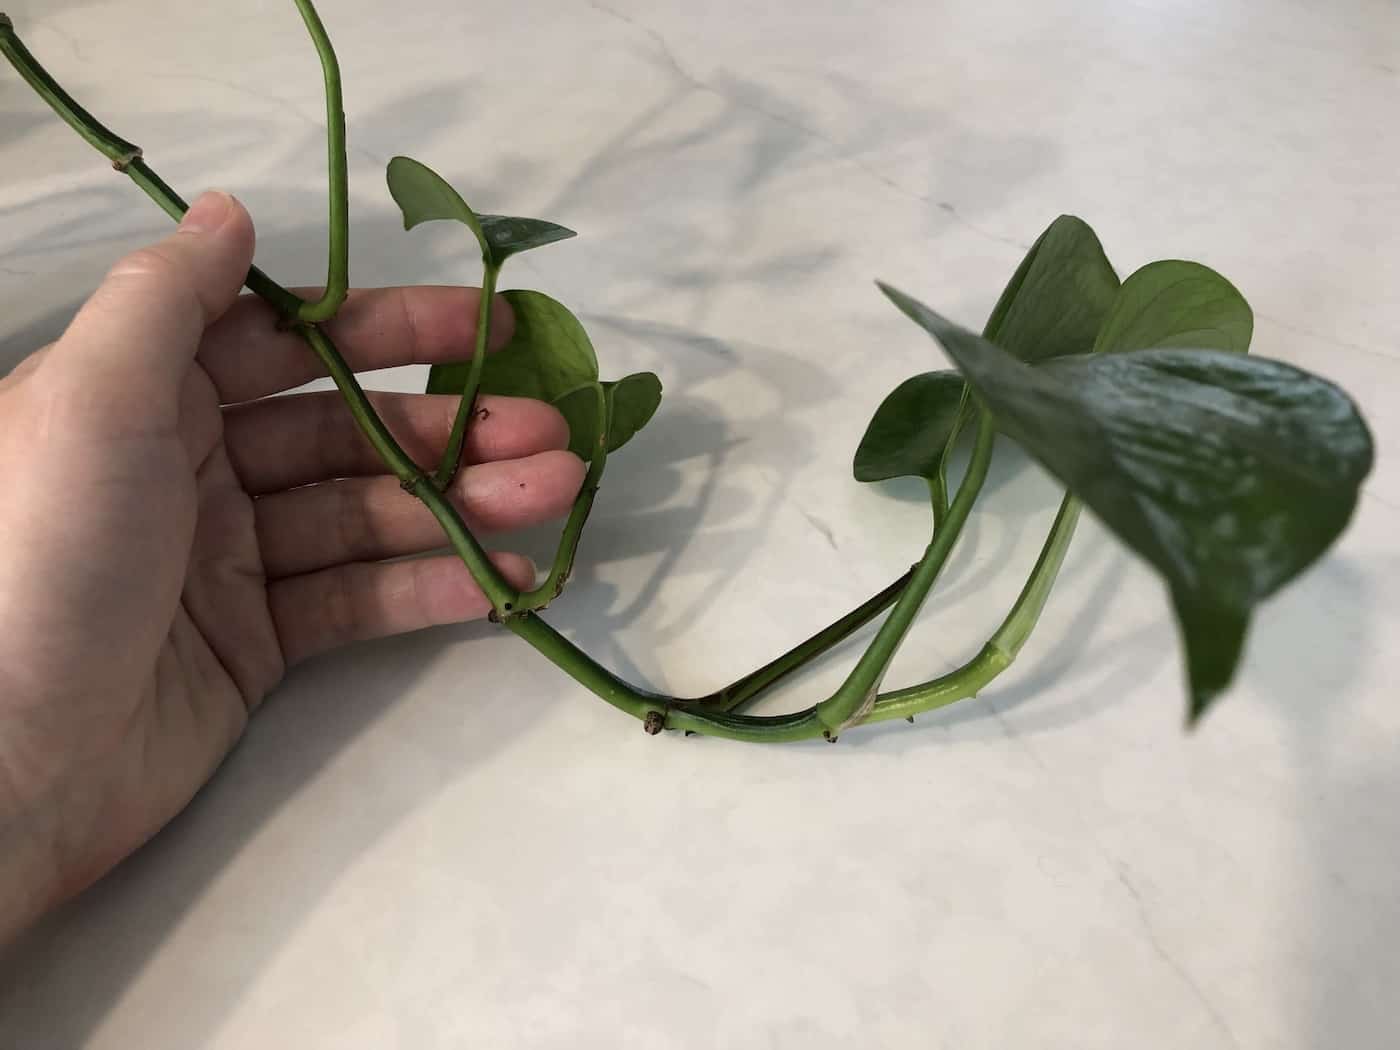 Pothos stem vine - where to take cutting